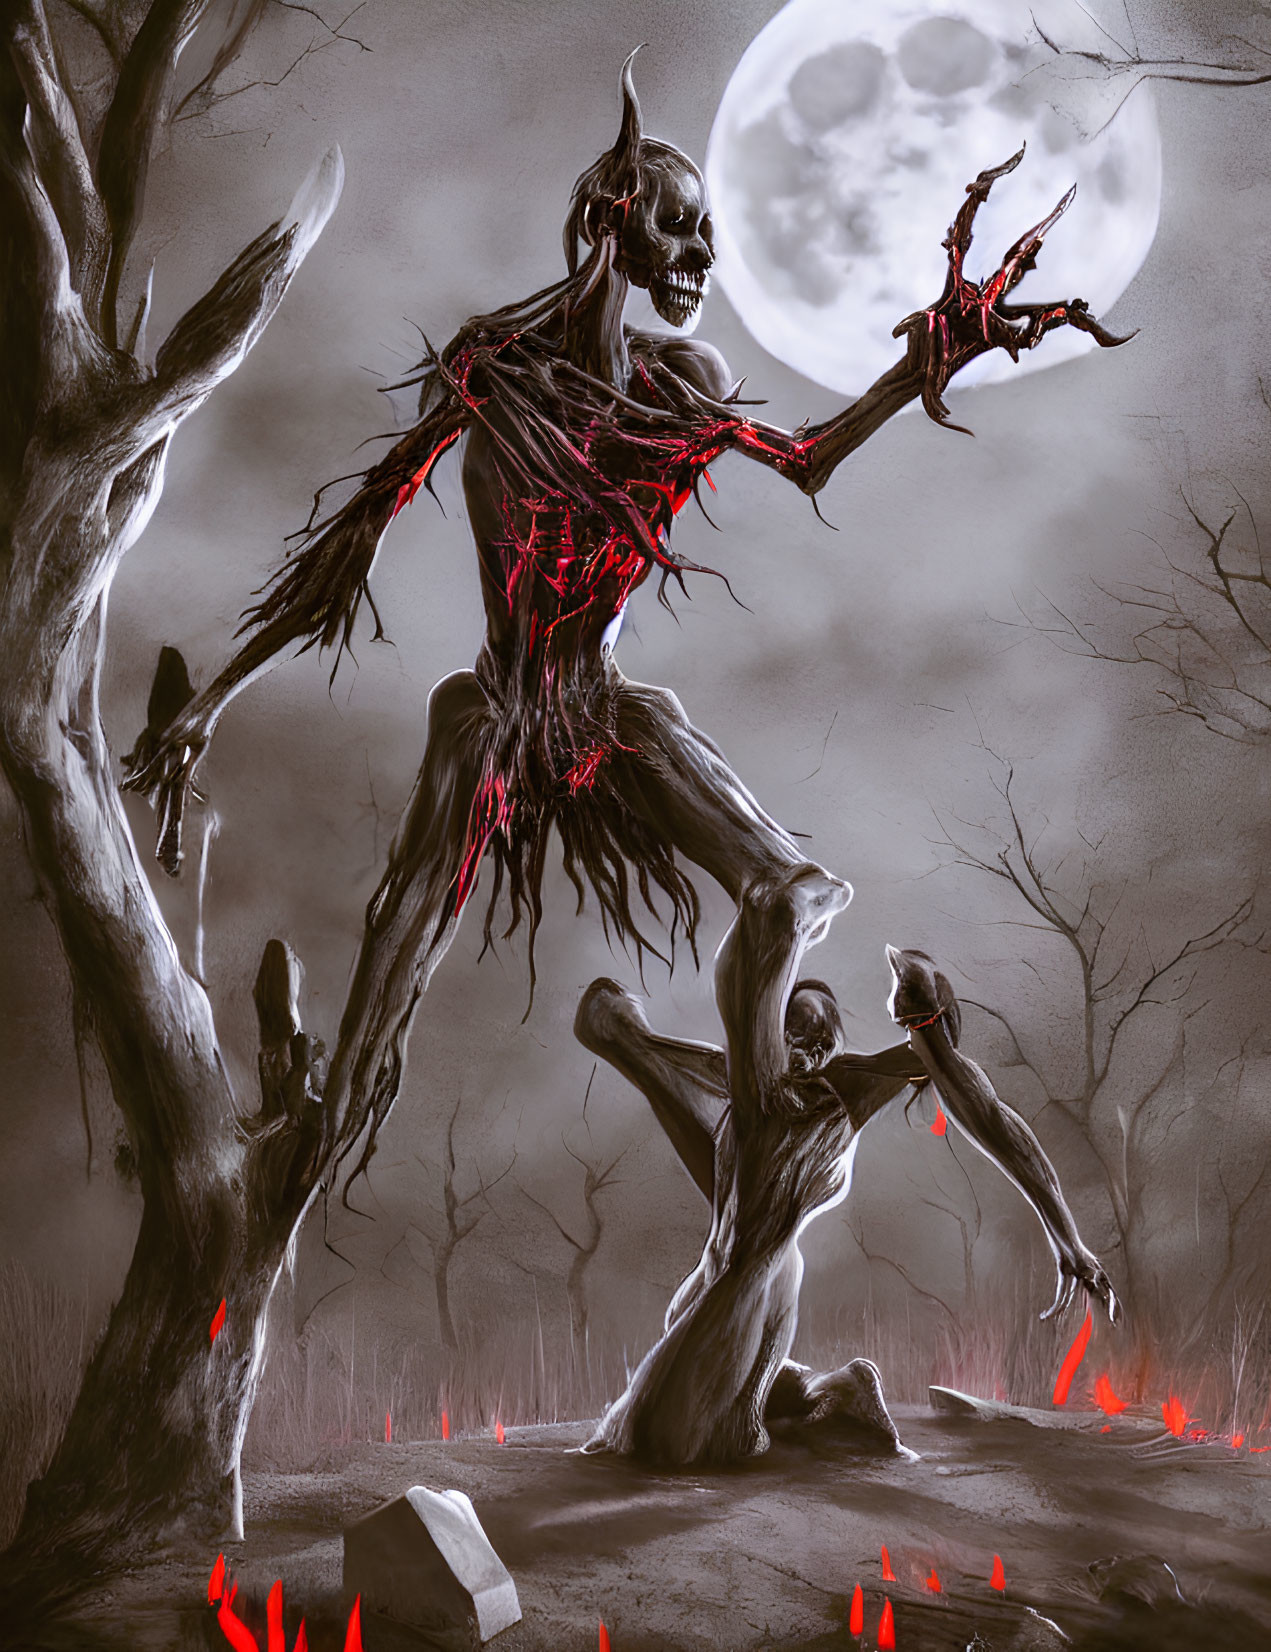 Sinister skeletal figure in nightmarish moonlit landscape